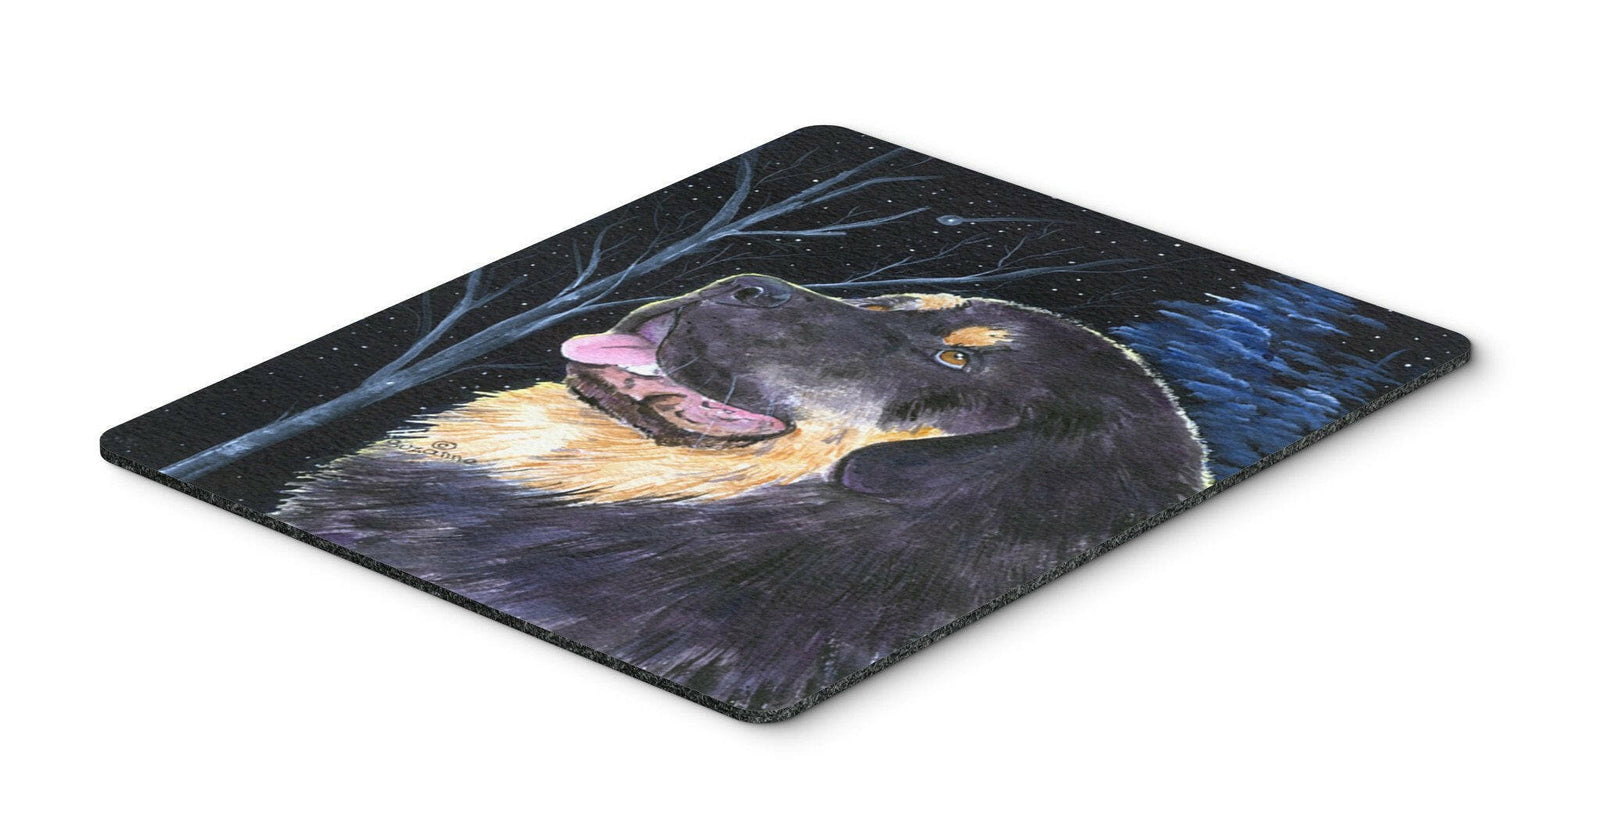 Starry Night Tibetan Mastiff Mouse Pad, Hot Pad or Trivet by Caroline's Treasures